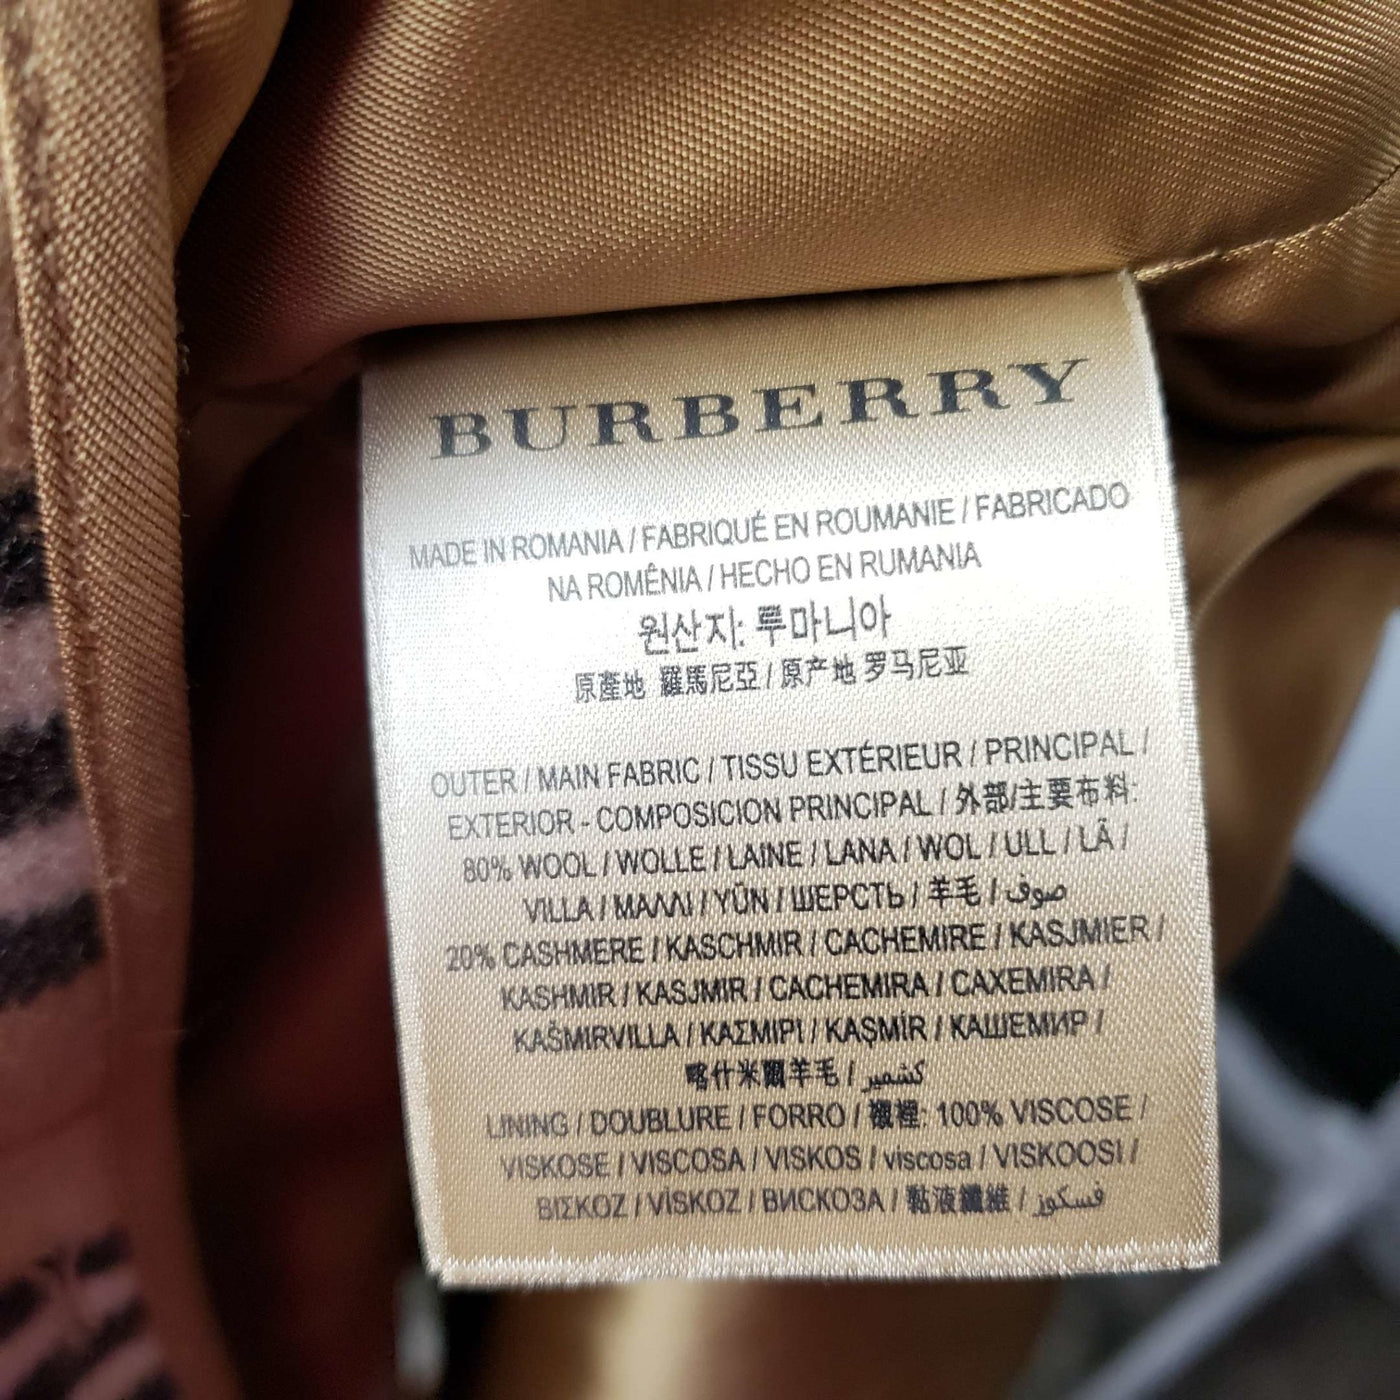 Burberry Cardigan or Coat Warmer or Insert Brand New - Luxury Cheaper